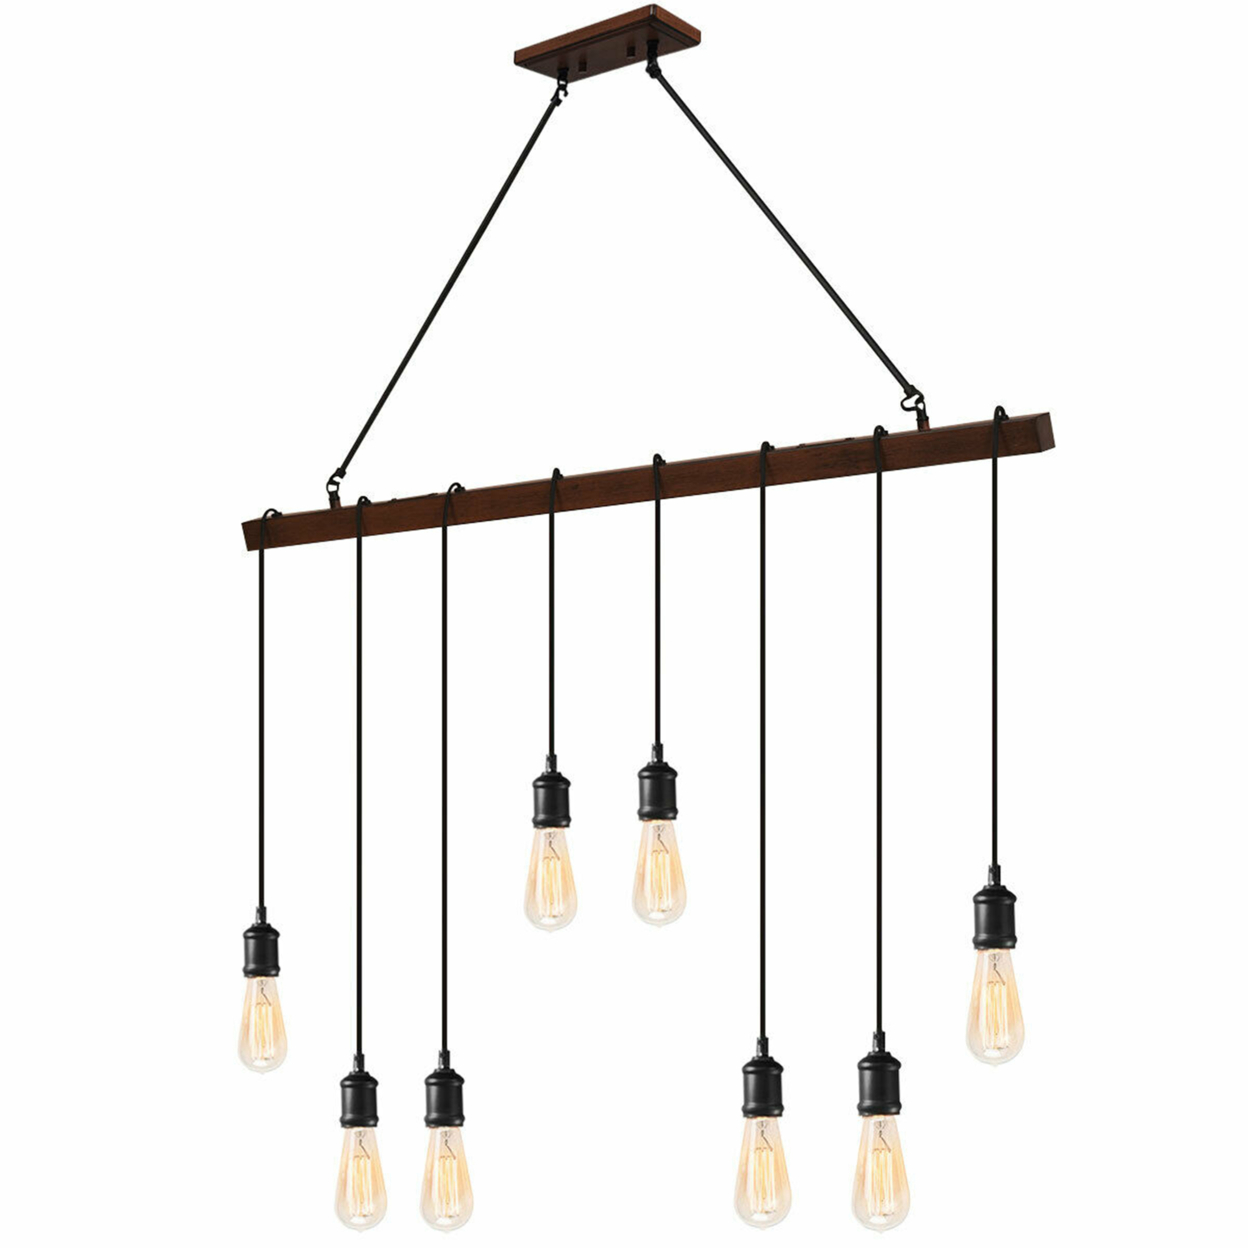 8-light Industrial Pendant Light Wood Hanging Chandelier Fixture For Home Decor